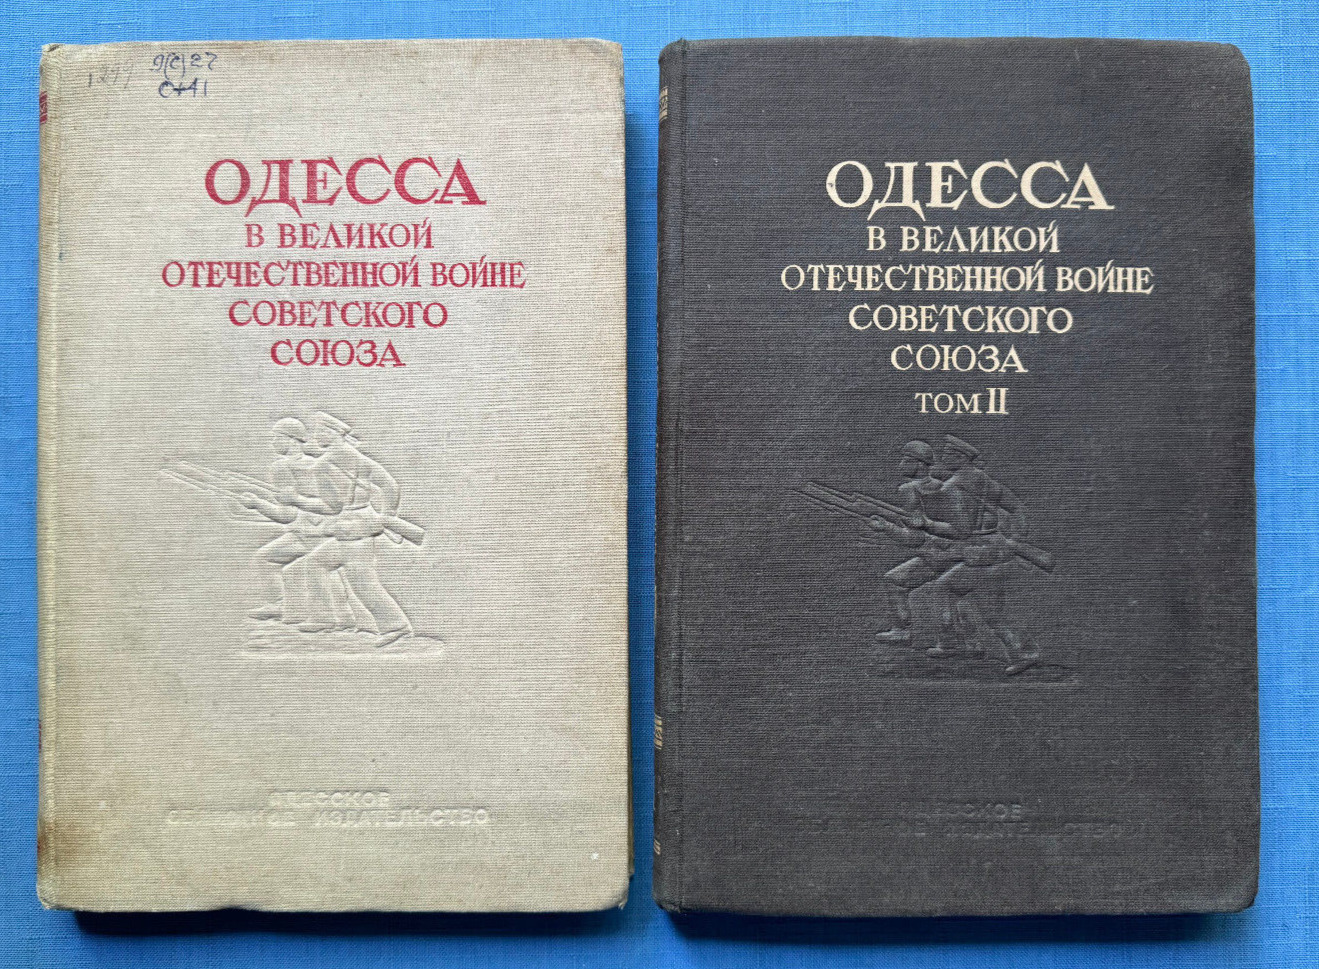 1947 Odessa Great Patriotic War of Soviet Union WWII Stalin 2 vol. Russian books